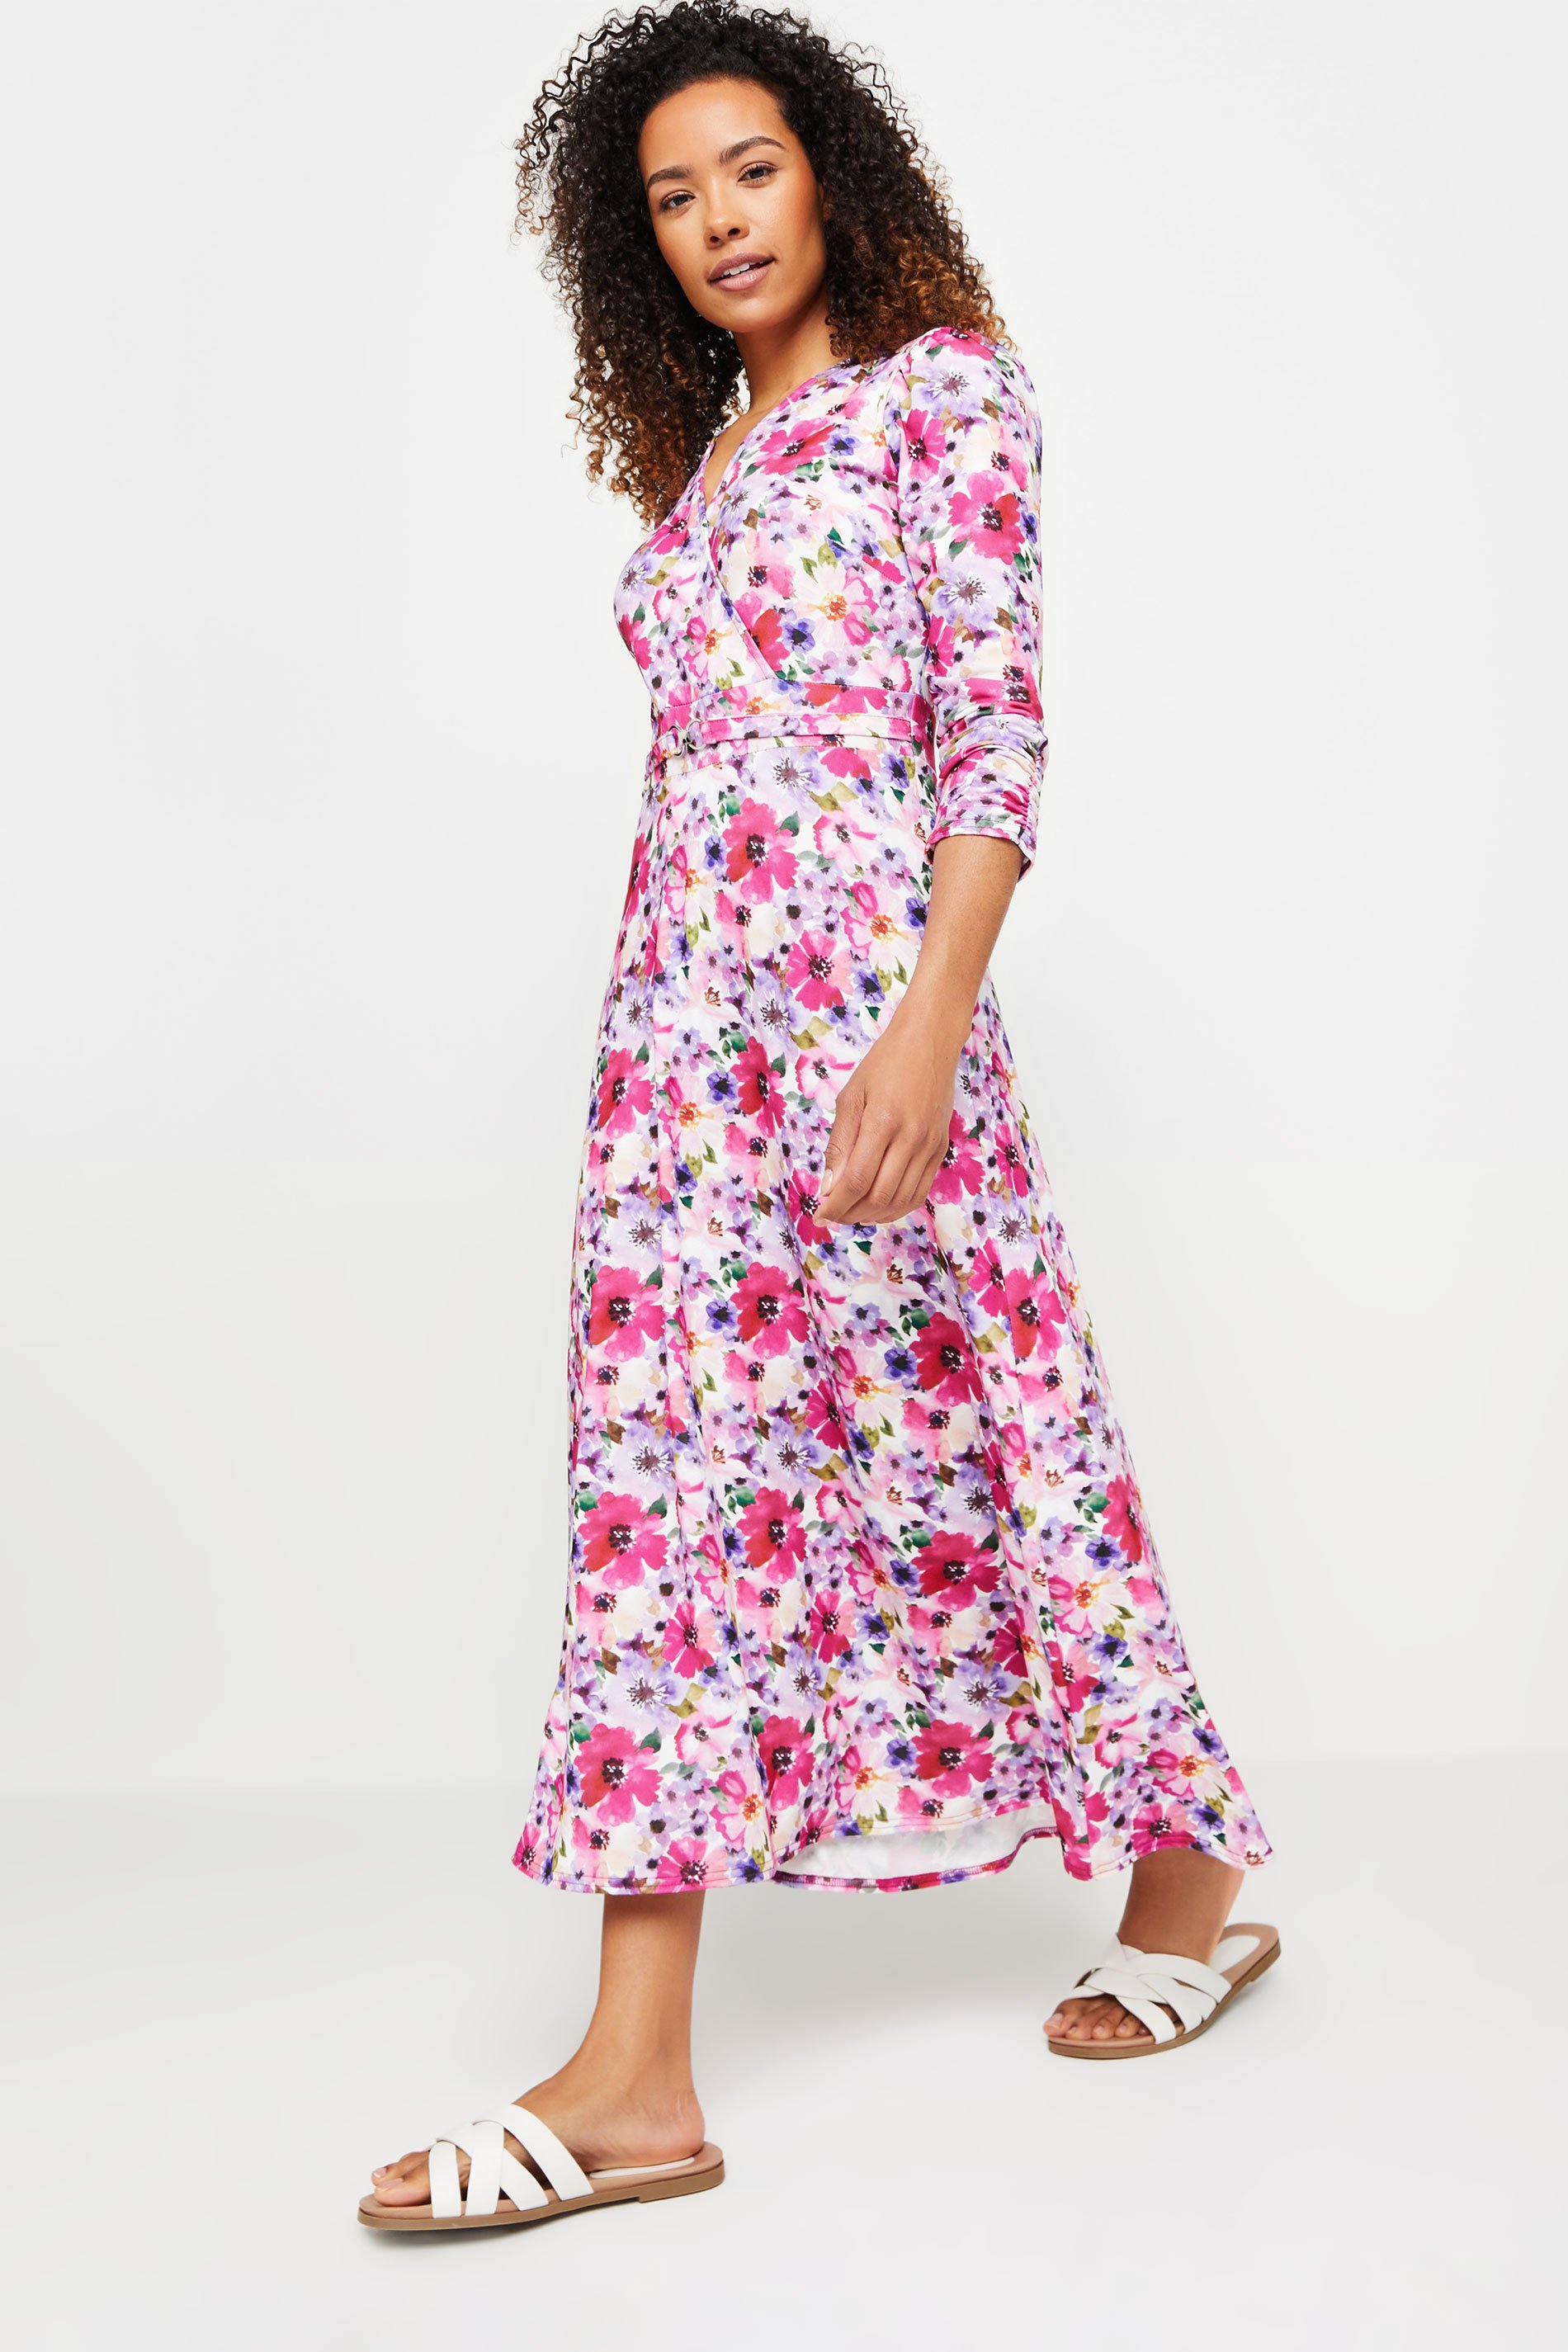 M&Co White Floral Print Belted Wrap Midi Dress | M&Co 2